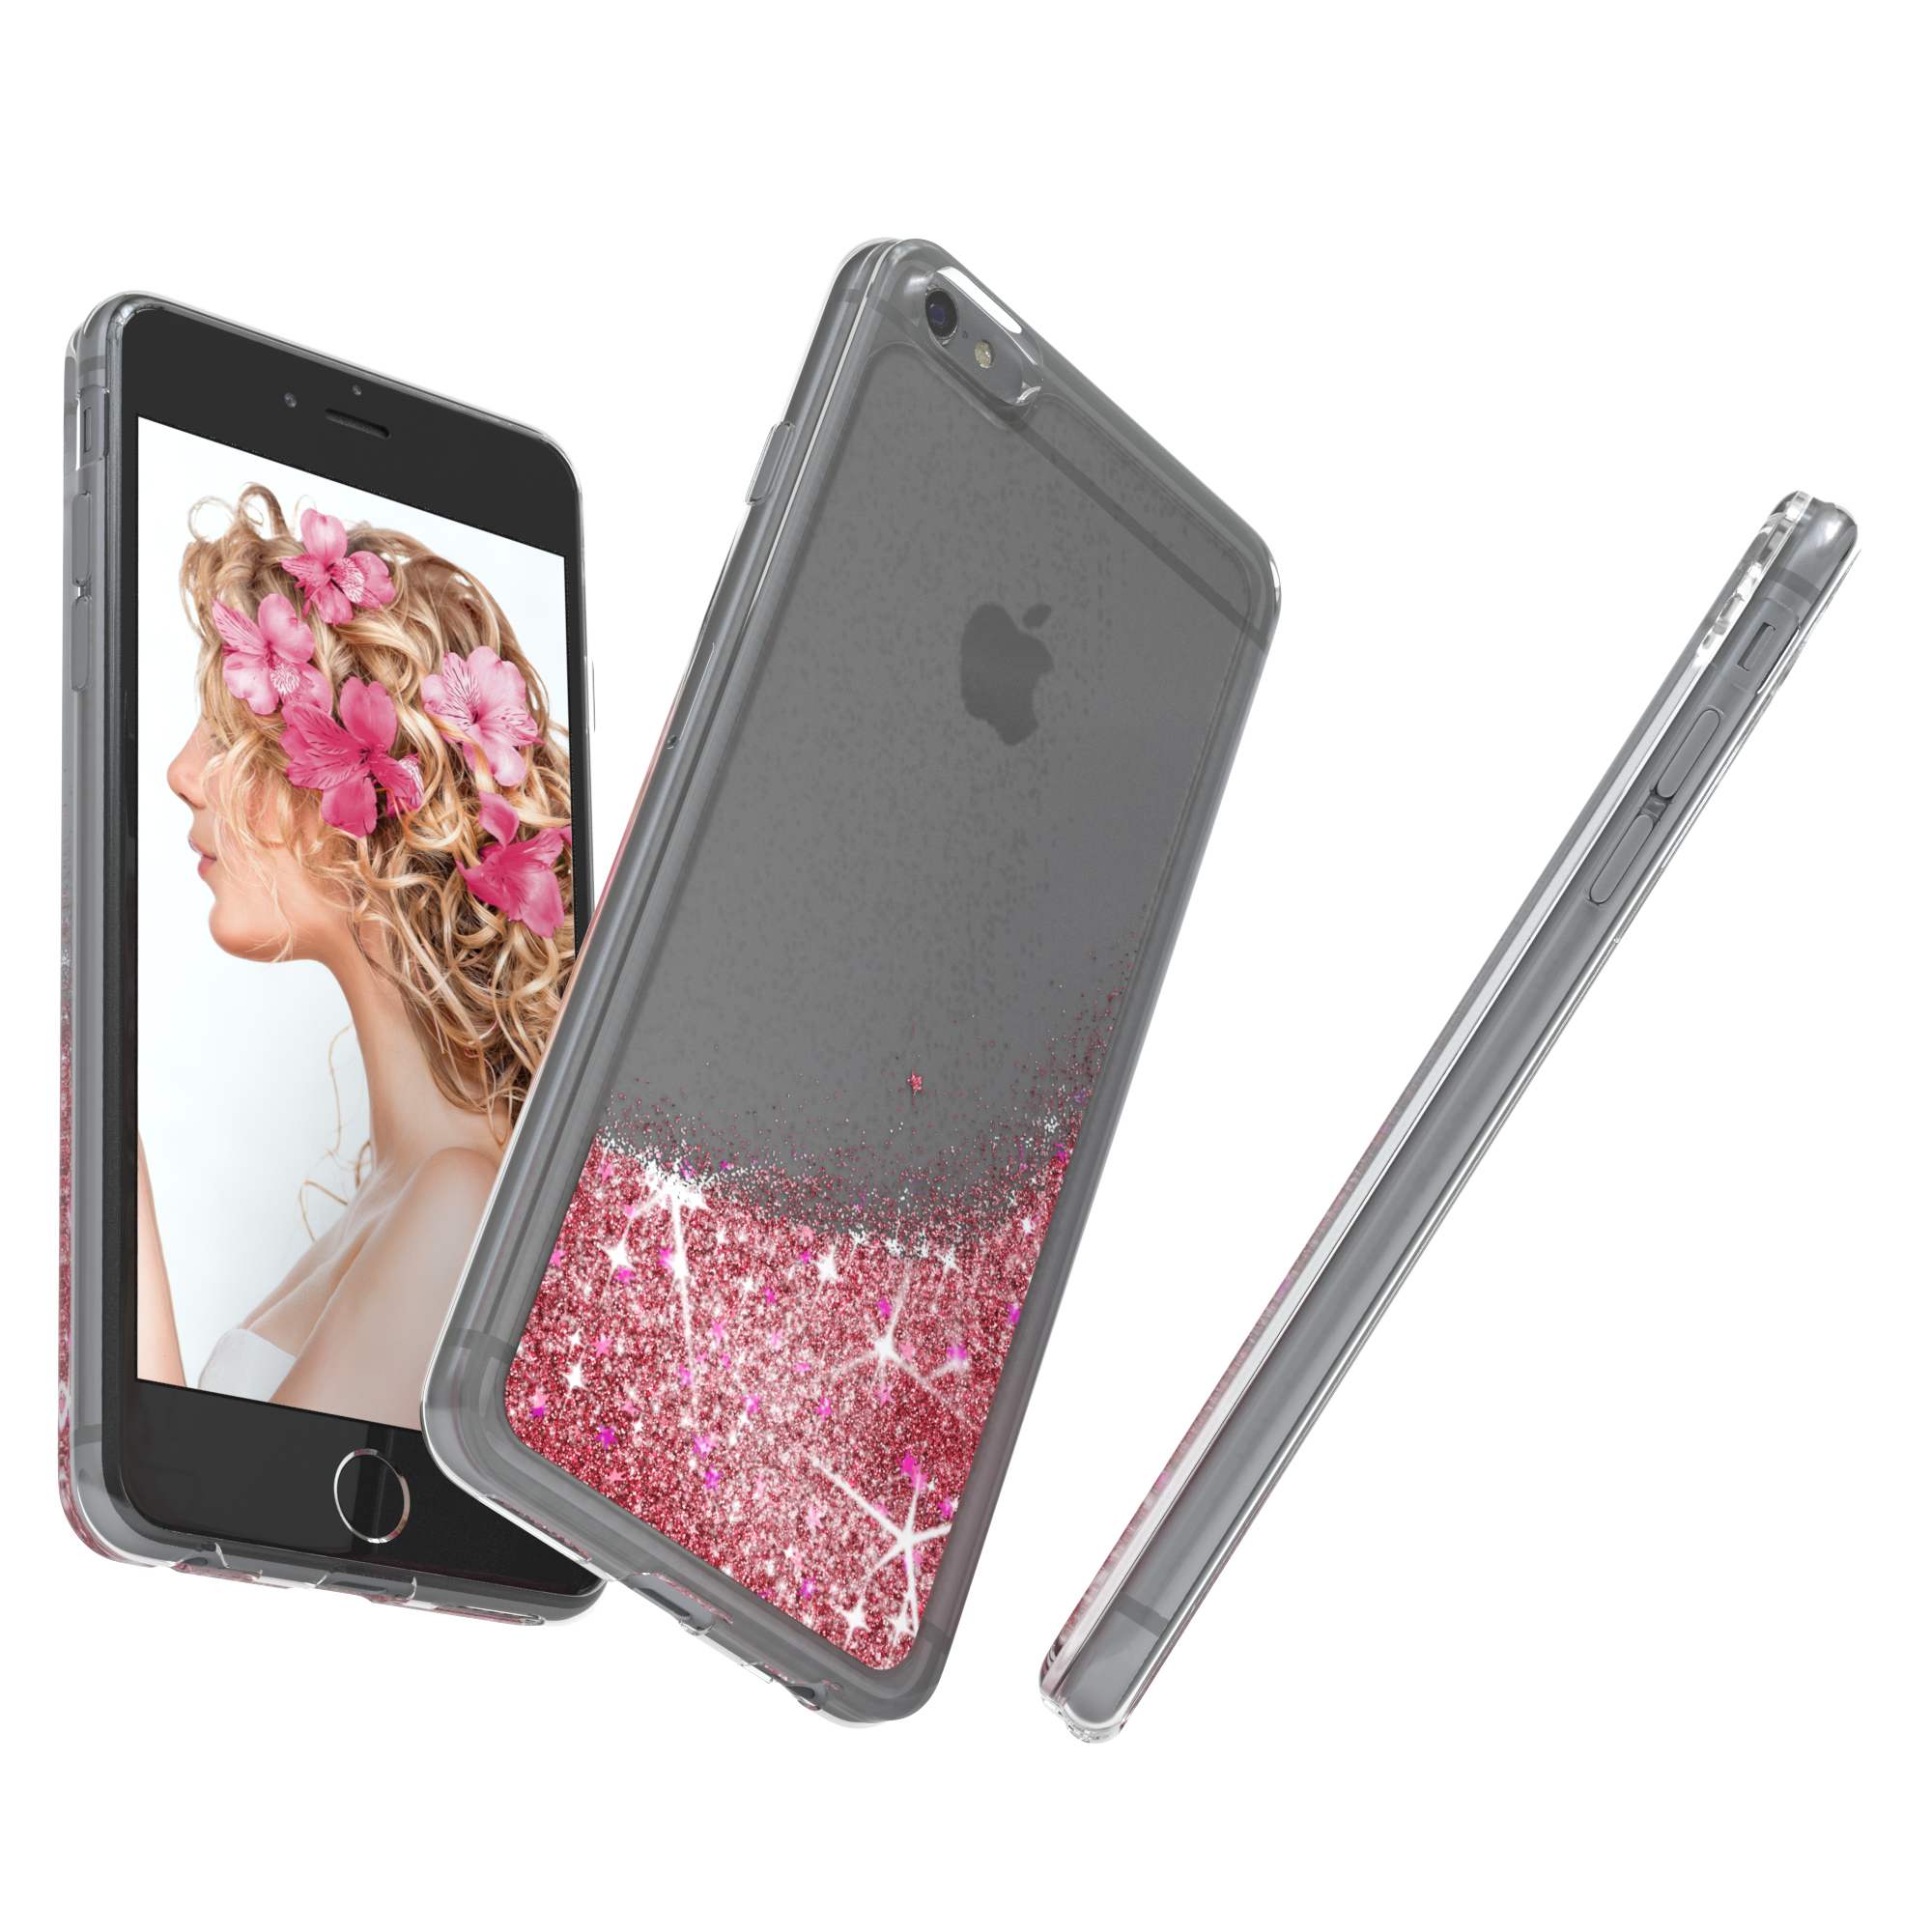 EAZY CASE Glitzerhülle Flüssig, Backcover, Rosa 6 Apple, 6S, / iPhone